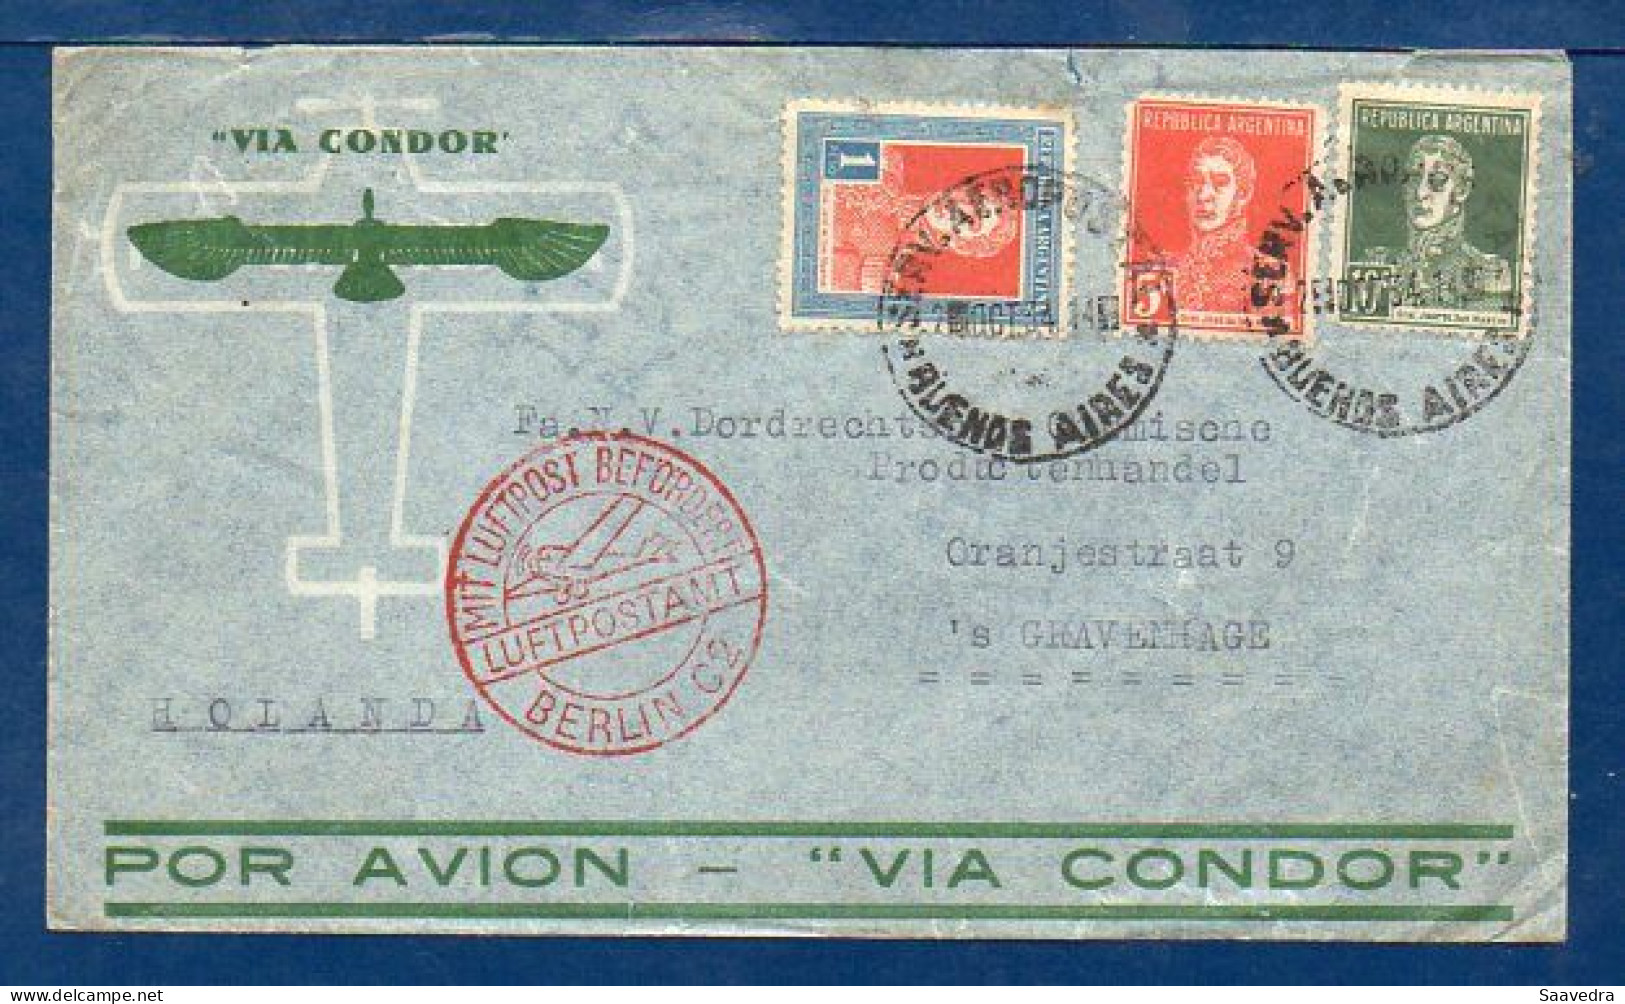 Argentina To Netherland, 1935, Via ZEPPELIN Flight G-409, SEE DESCRIPTION   (050) - Briefe U. Dokumente